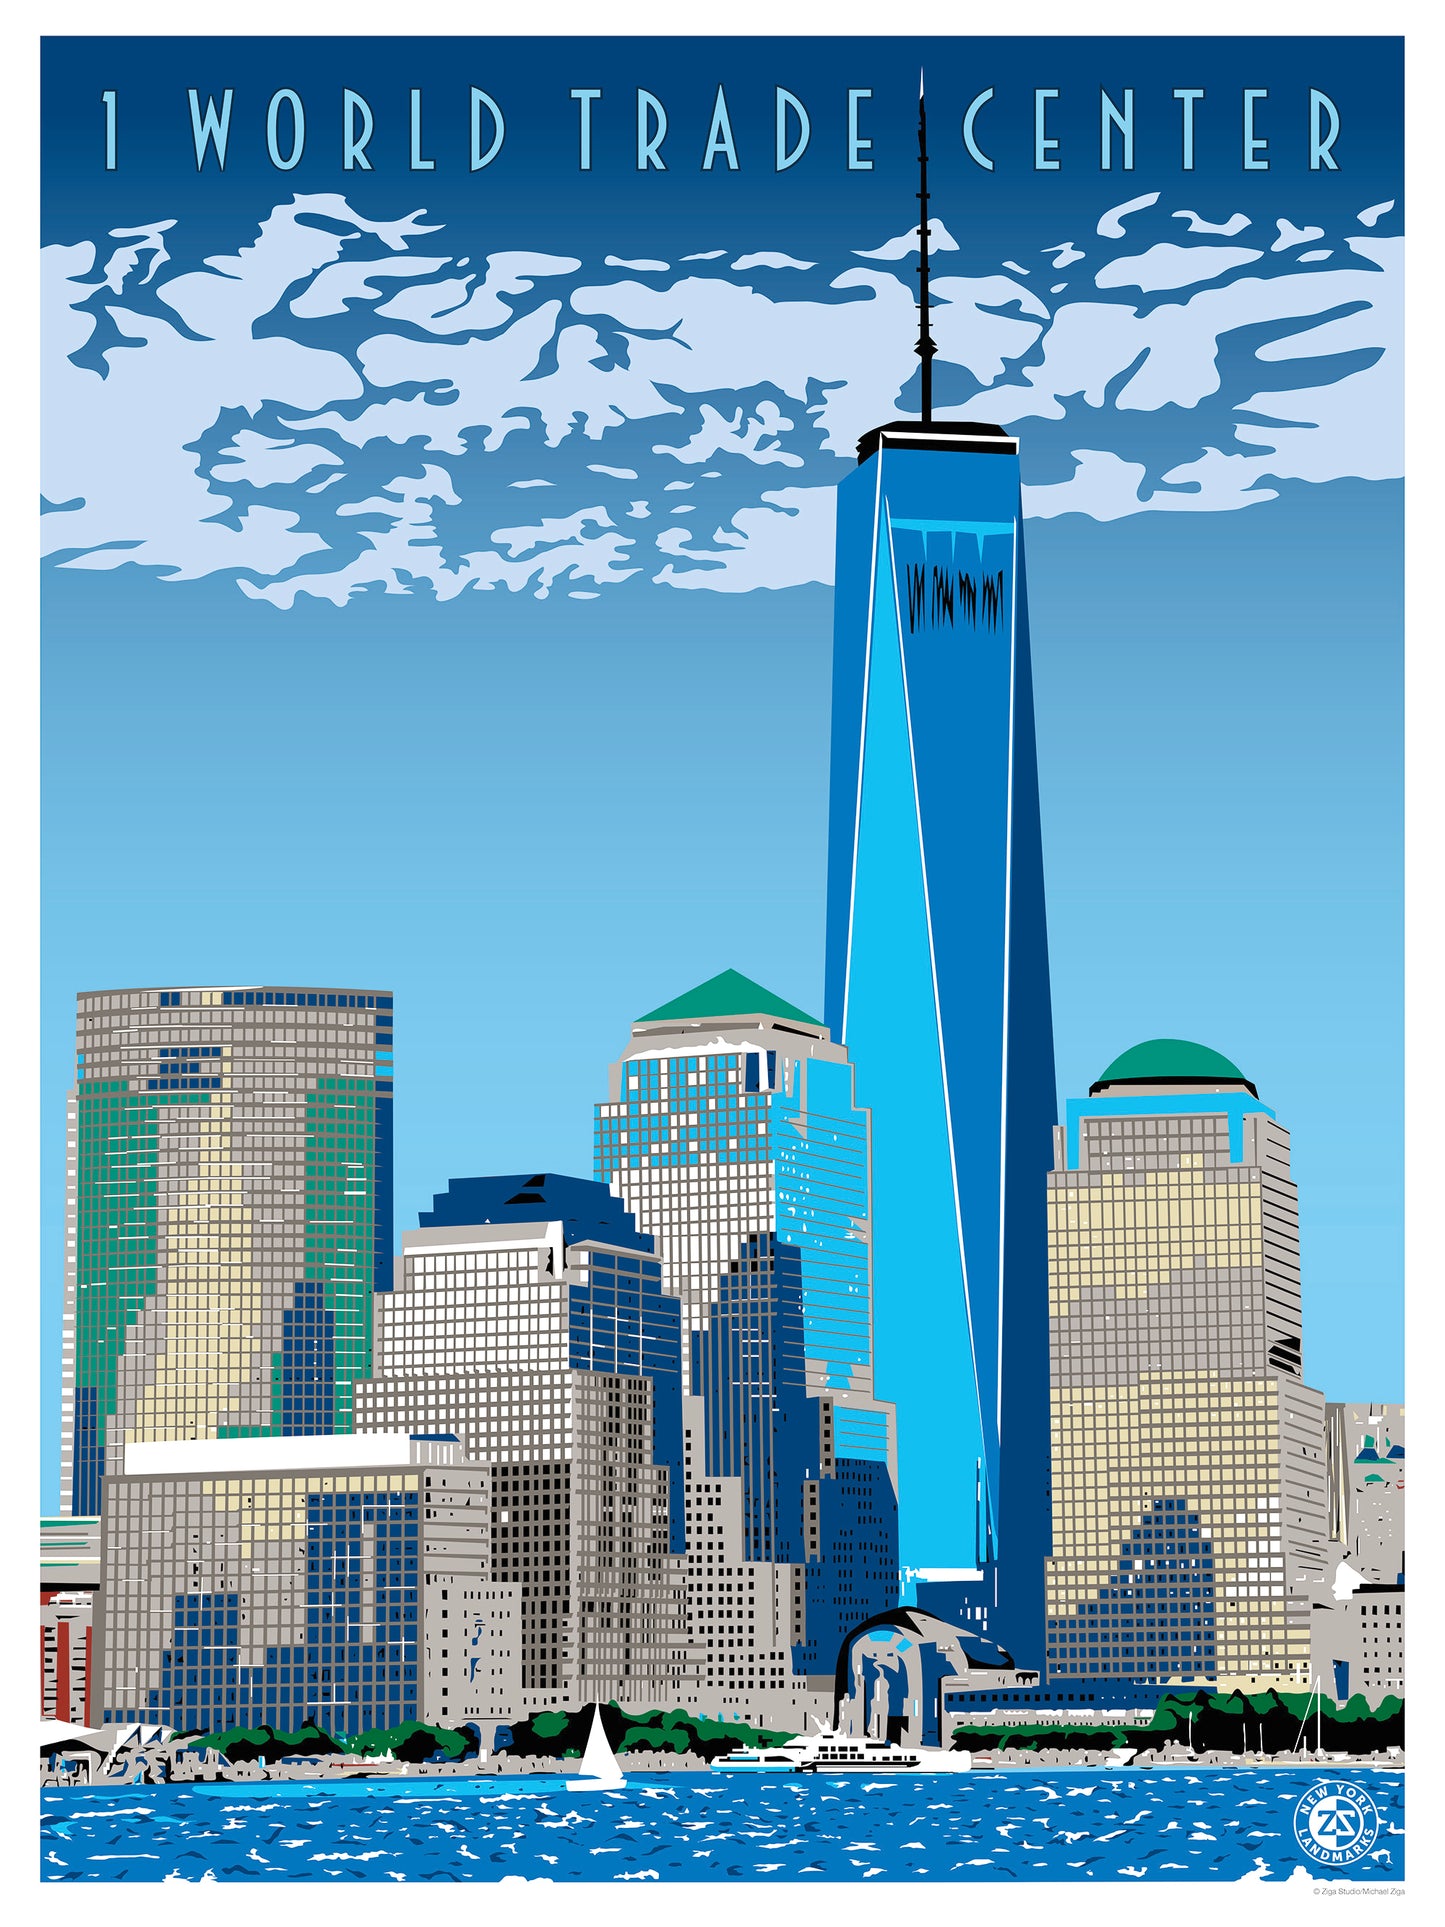 Ziga – Print 1 World Trade Center Media